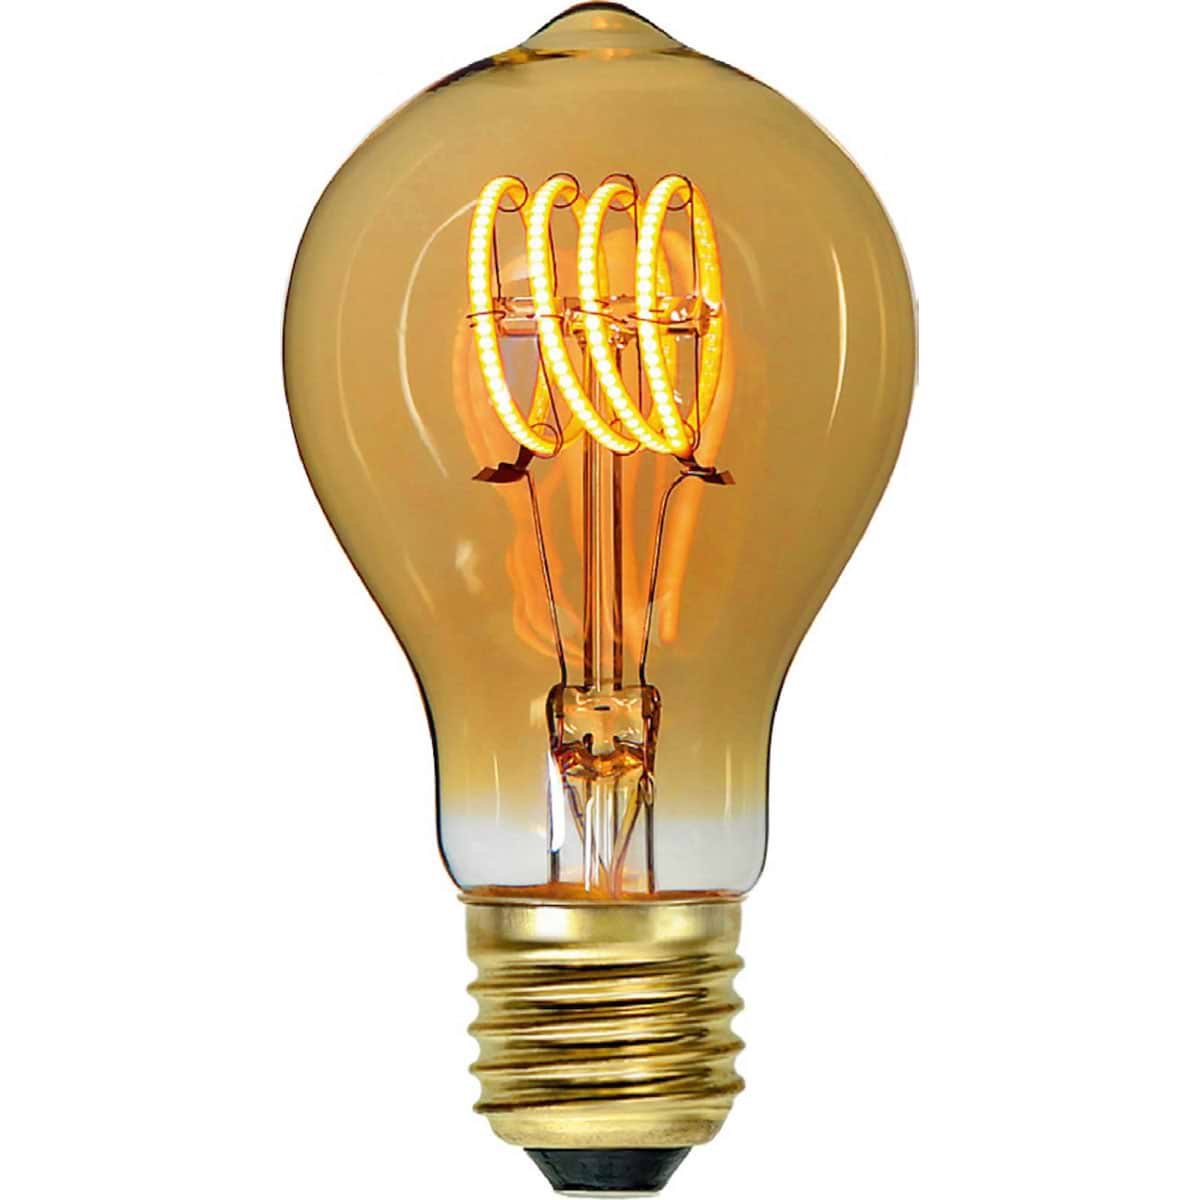 Groen Centraliseren dwaas LED Spiraal lamp 9W DIM, voor standaardlamp E27 fitting, 9 Watt, Amber.  Decoratief en dimbaar. HIGH LIGHT - L260036 - Webo Verlichting